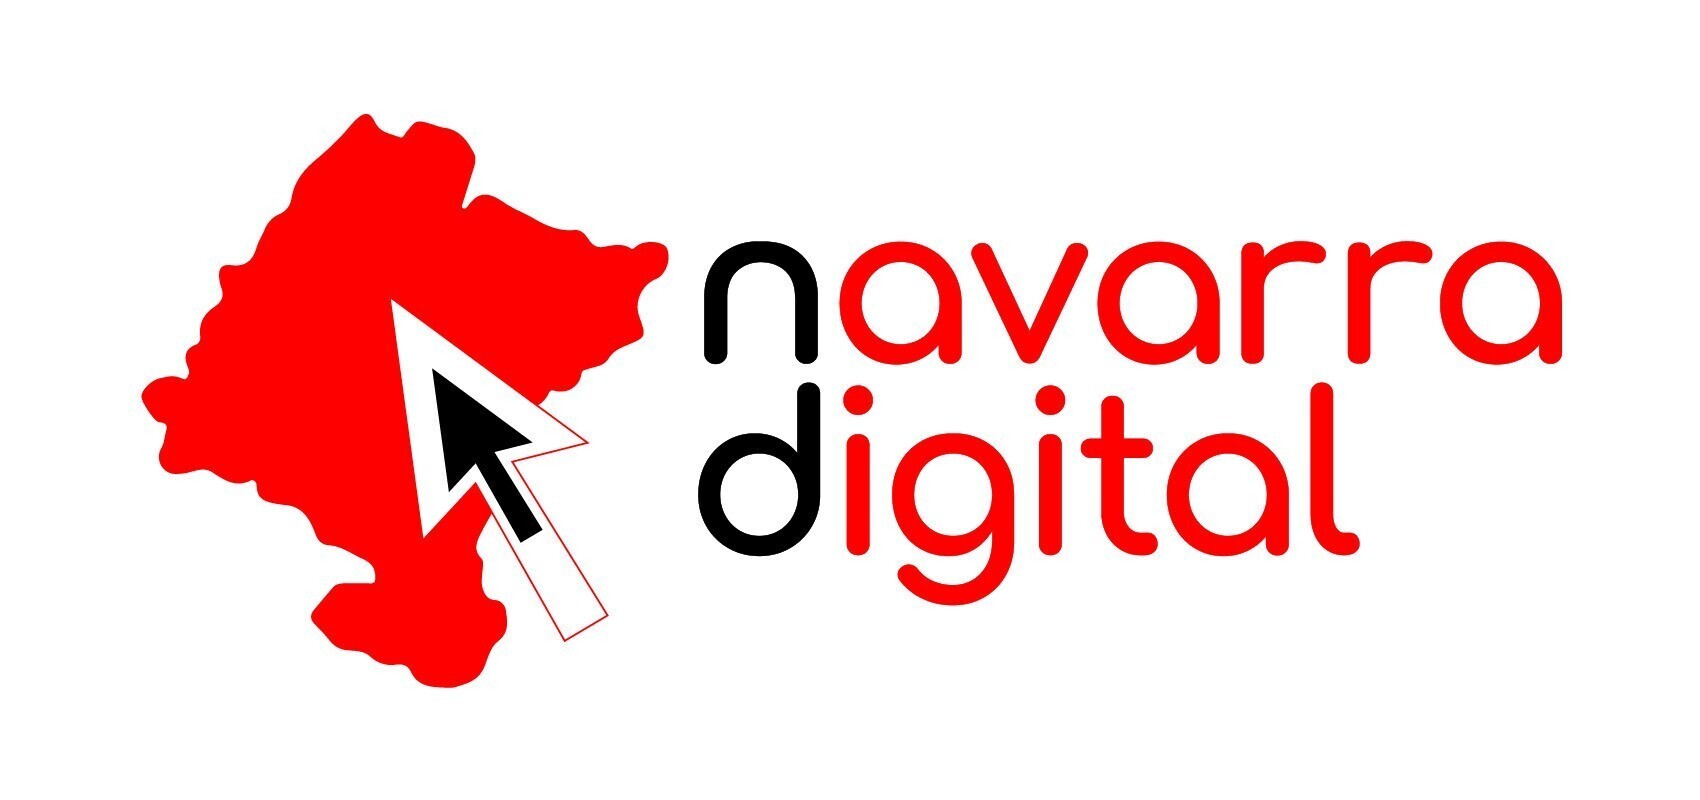 (c) Navarradigital.es